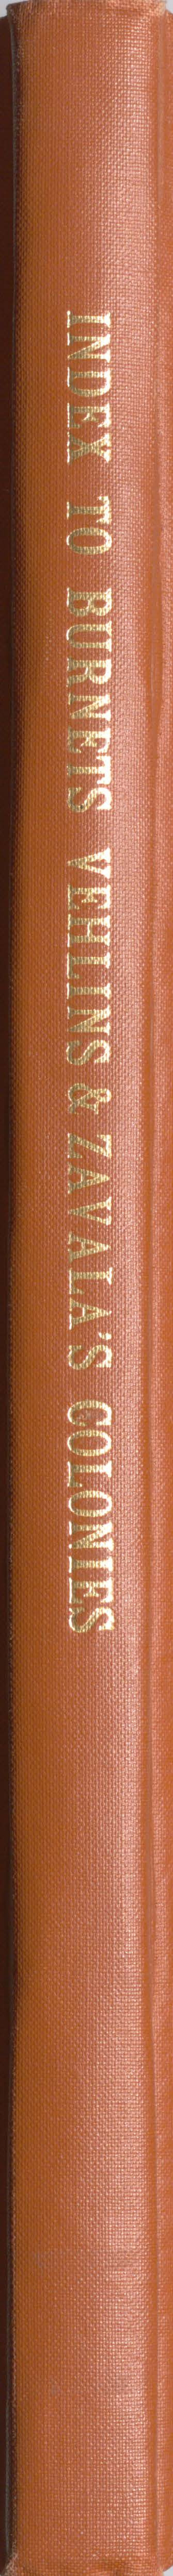 94553, Index to Burnet's, [Vehlein's] & Zavala's Colonies, Historical Volumes